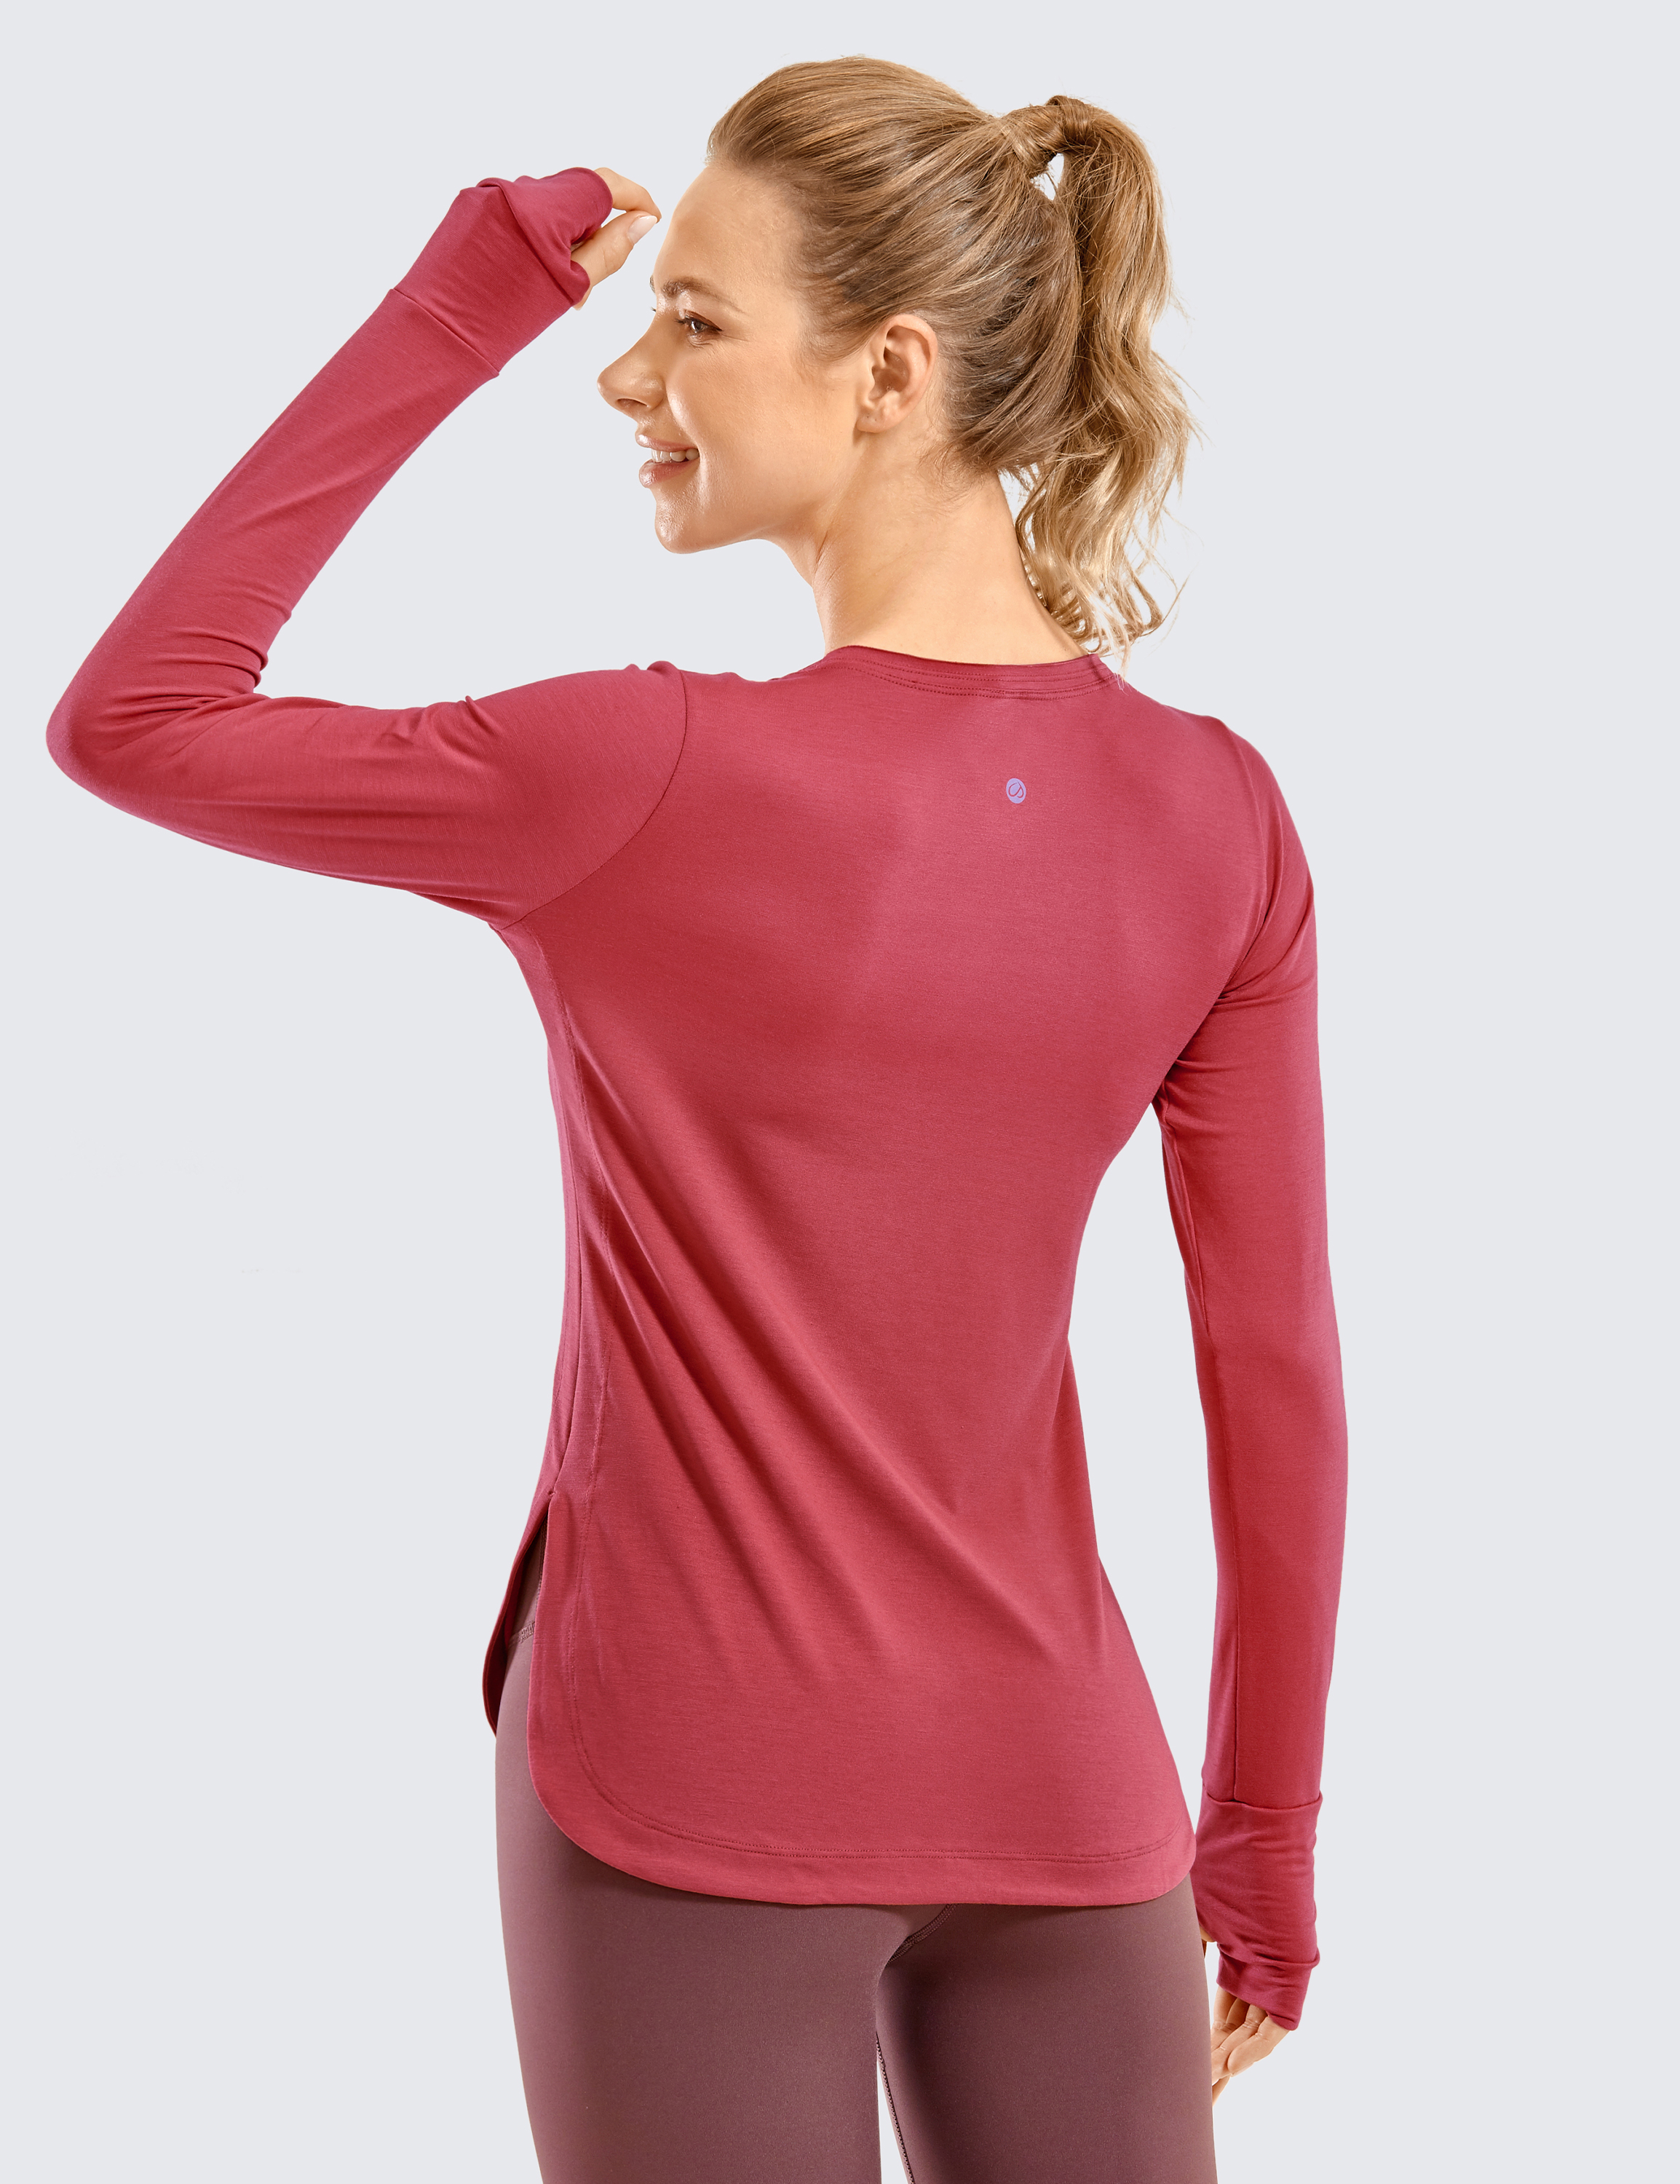 CRZ YOGA Women's Running Shirt Long Sleeve Half-Zip Workout Tops Crop  Athletic